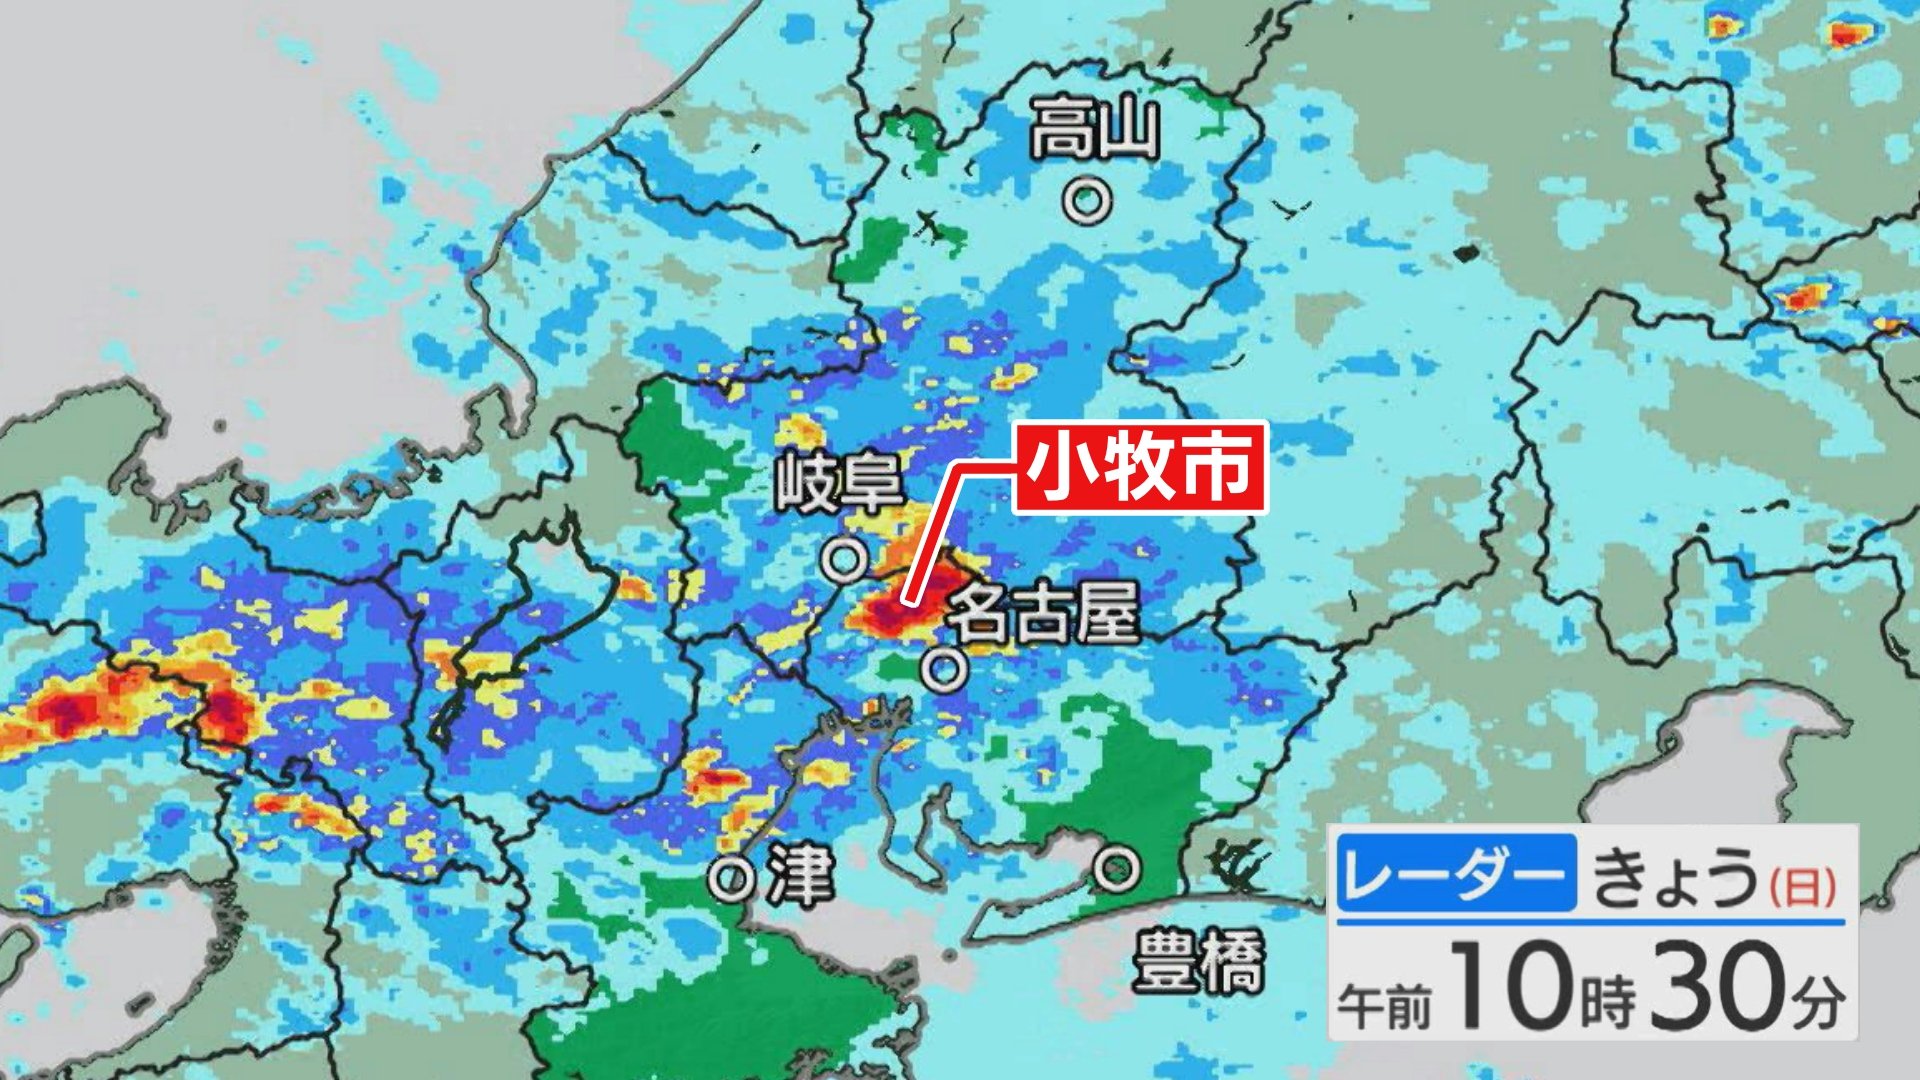 【速報】午前11時 愛知県で記録的短時間大雨情報 小牧市付近で約100ミリ